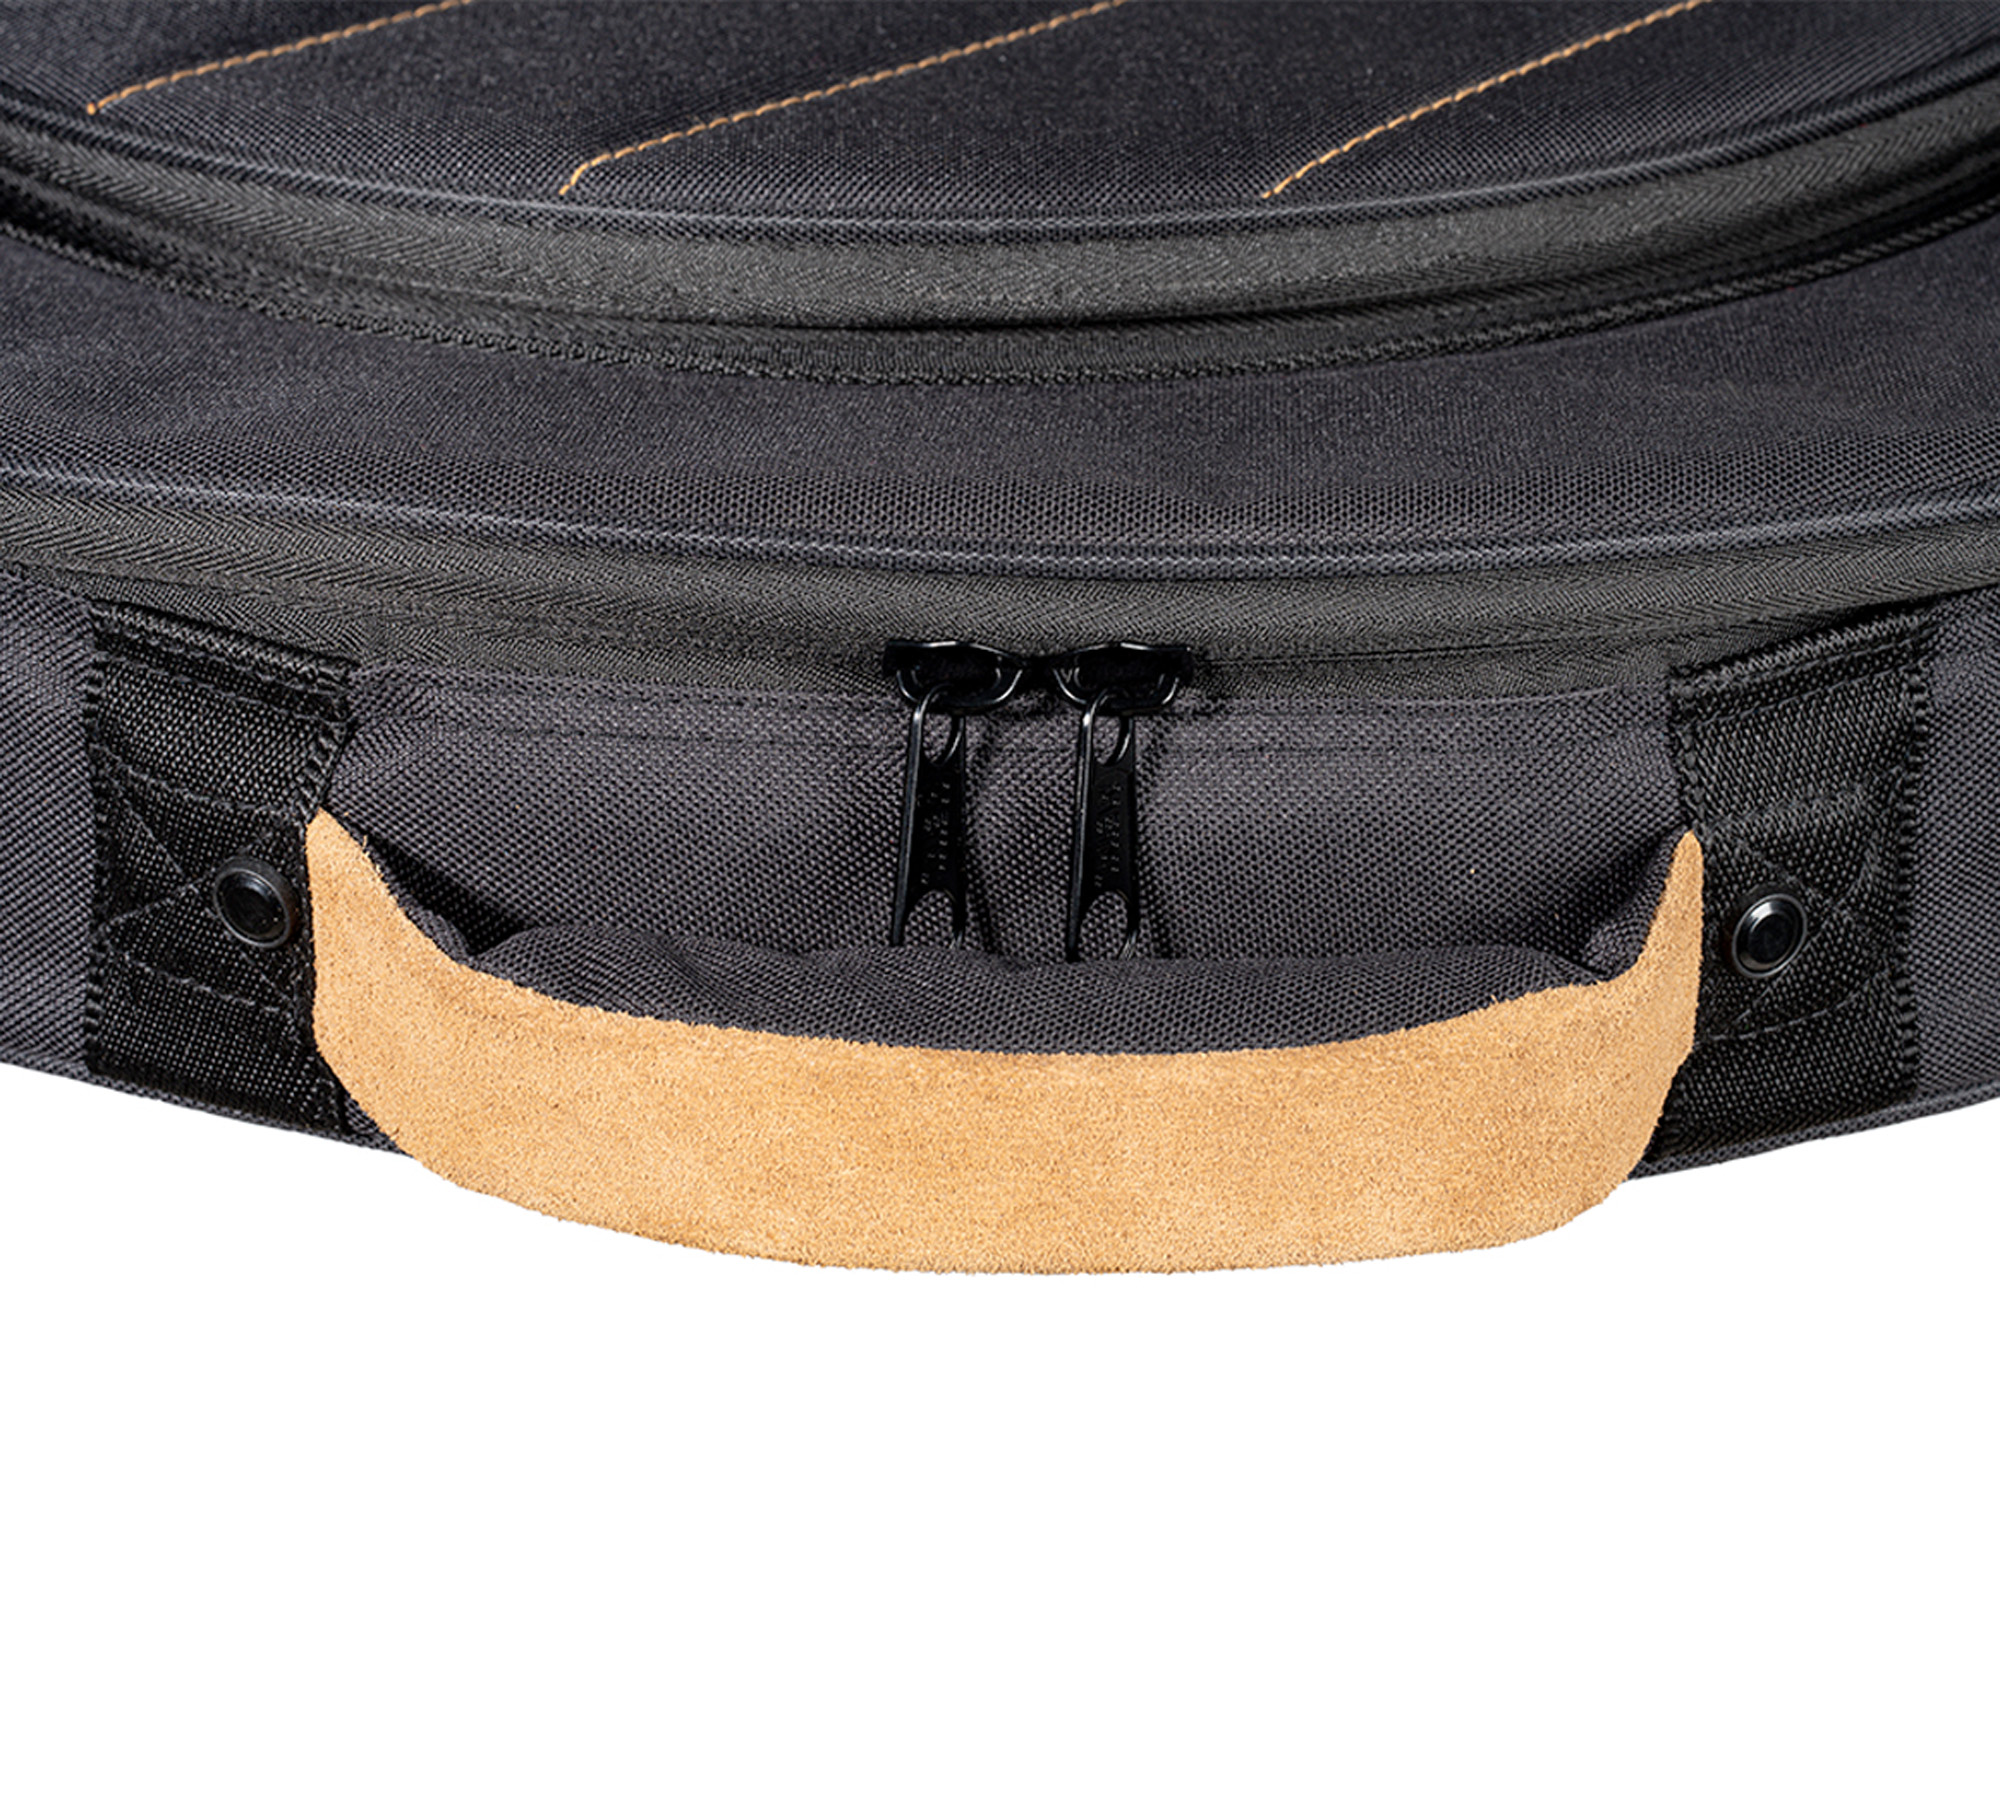 Meinl Mccb22bk Housse Cymbales Woven Black - Cymbal bag - Variation 4